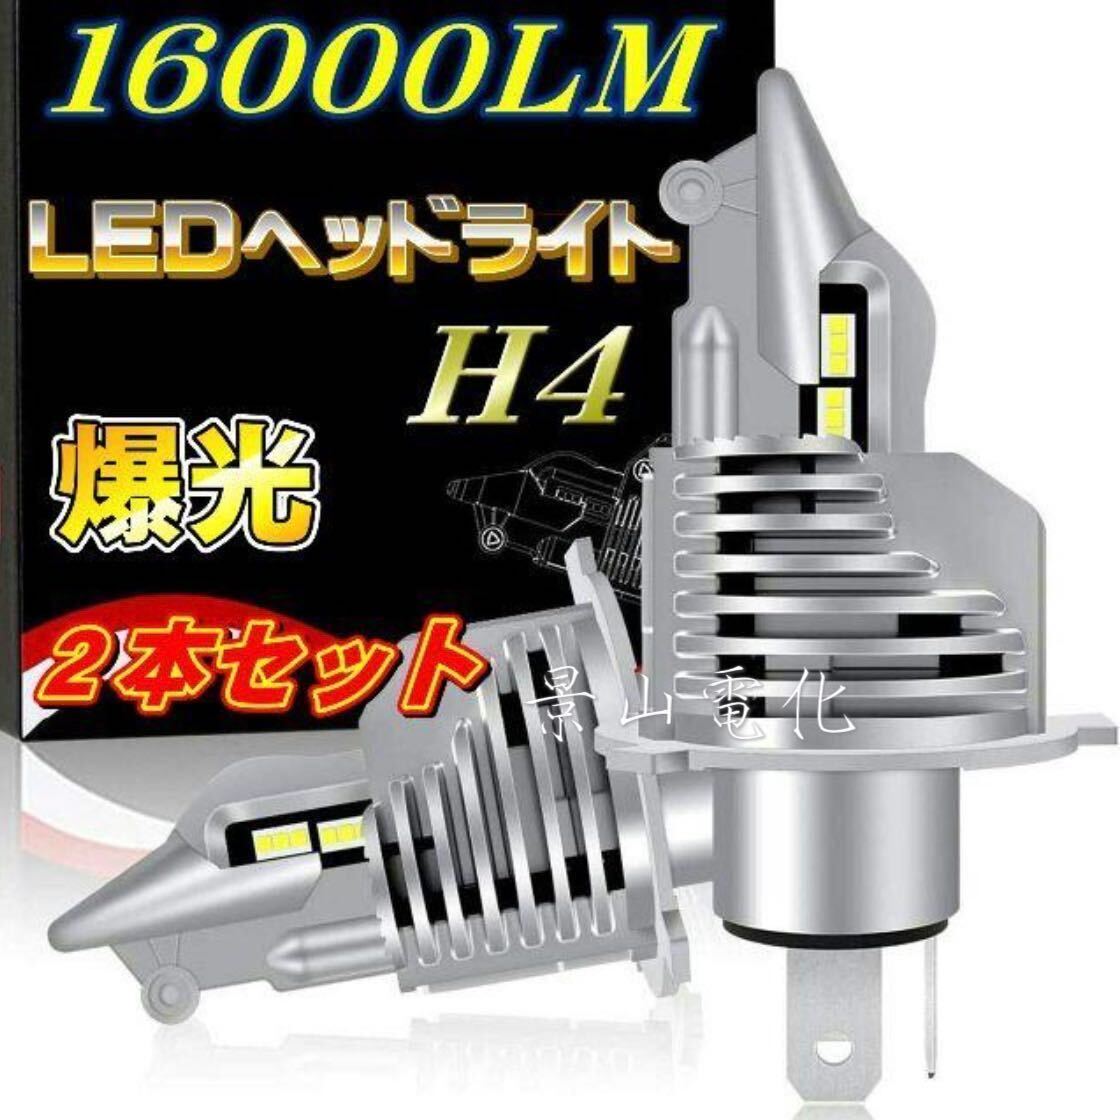 H4 LED ヘッドライト バルブ 2個セット Hi/Lo 16000LM 12V 24V 6000K ホワイト 車 バイク トラック 車検対応 明るい 高輝度 爆光 #H4-aの画像1